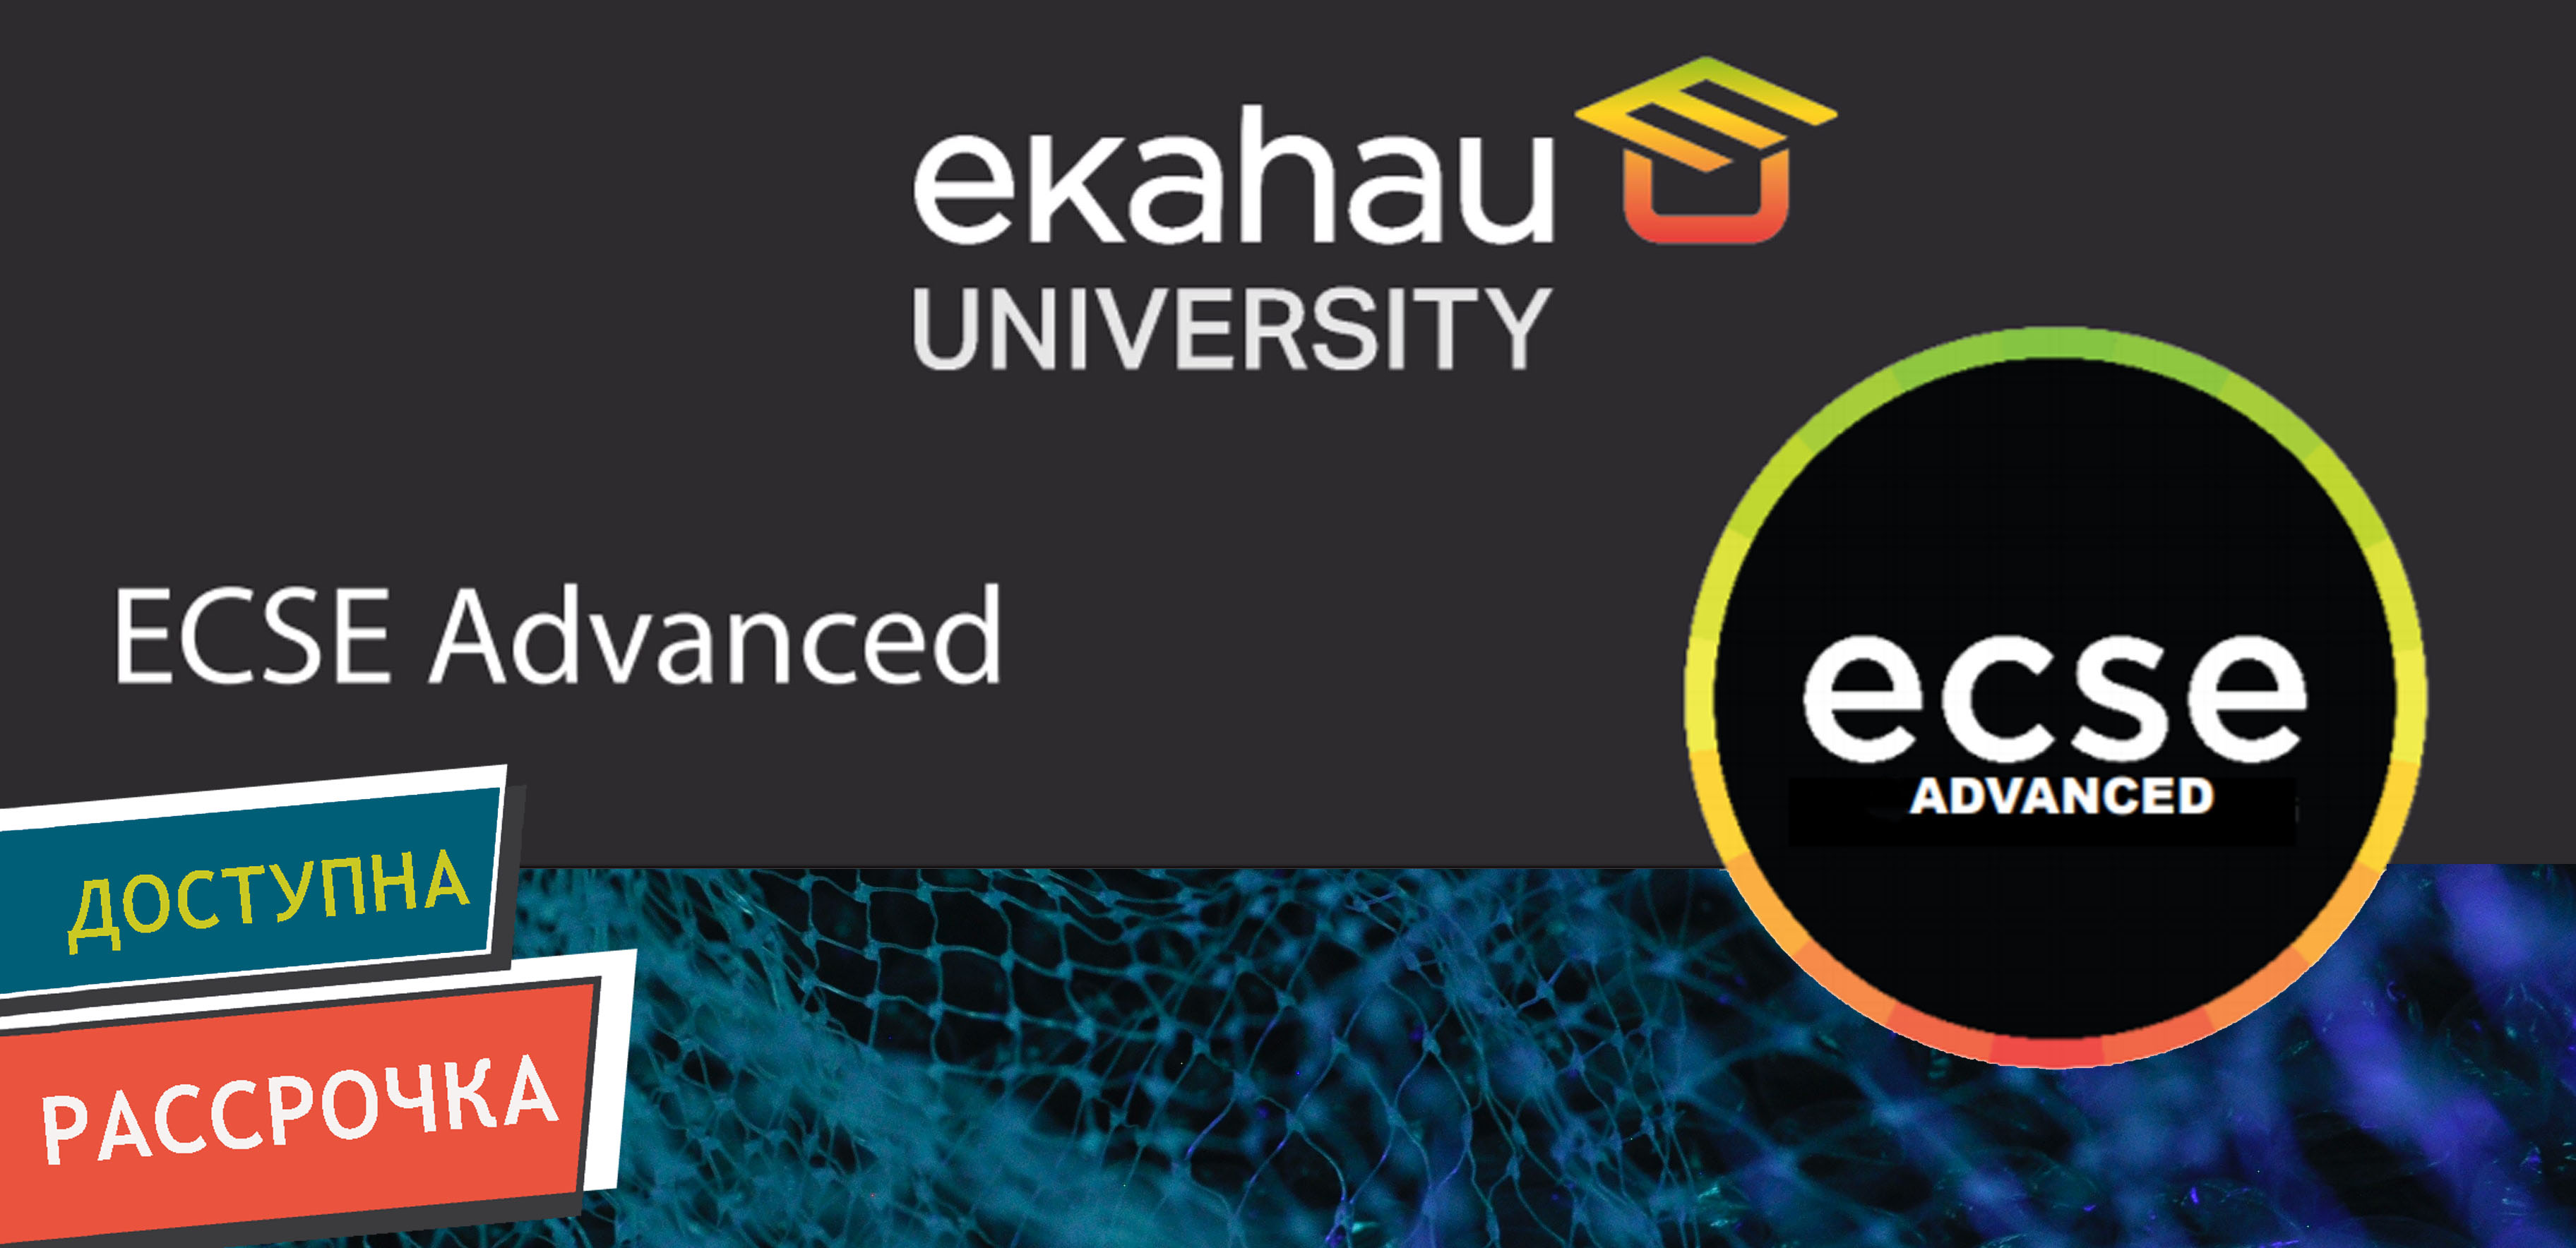 Ekahau University